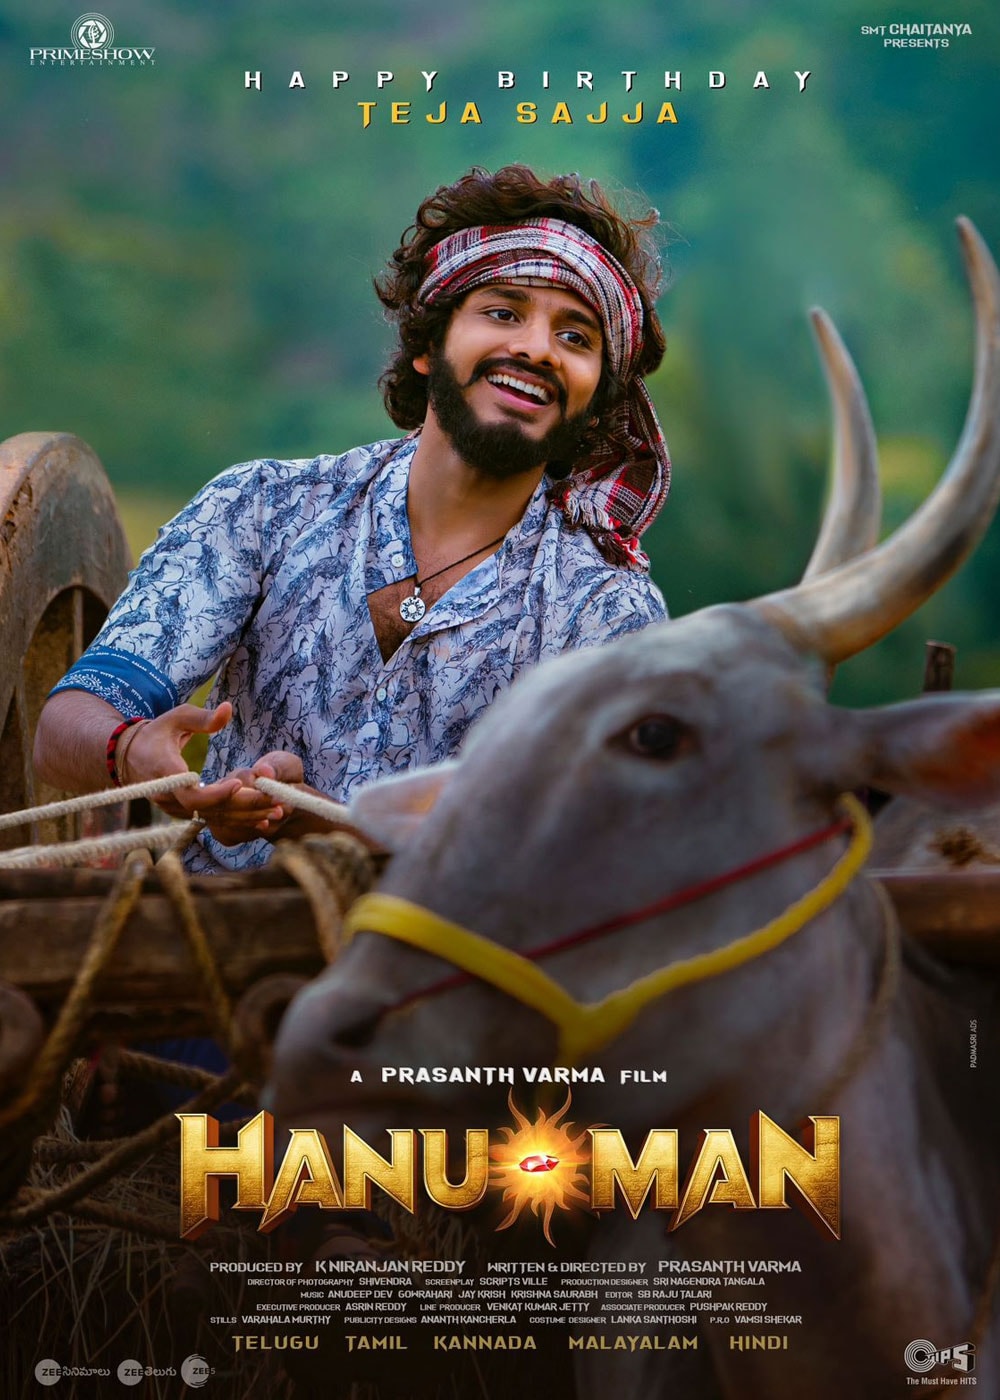 Hanuman Movie | Review, Cast, Trailer - Gadgets 360